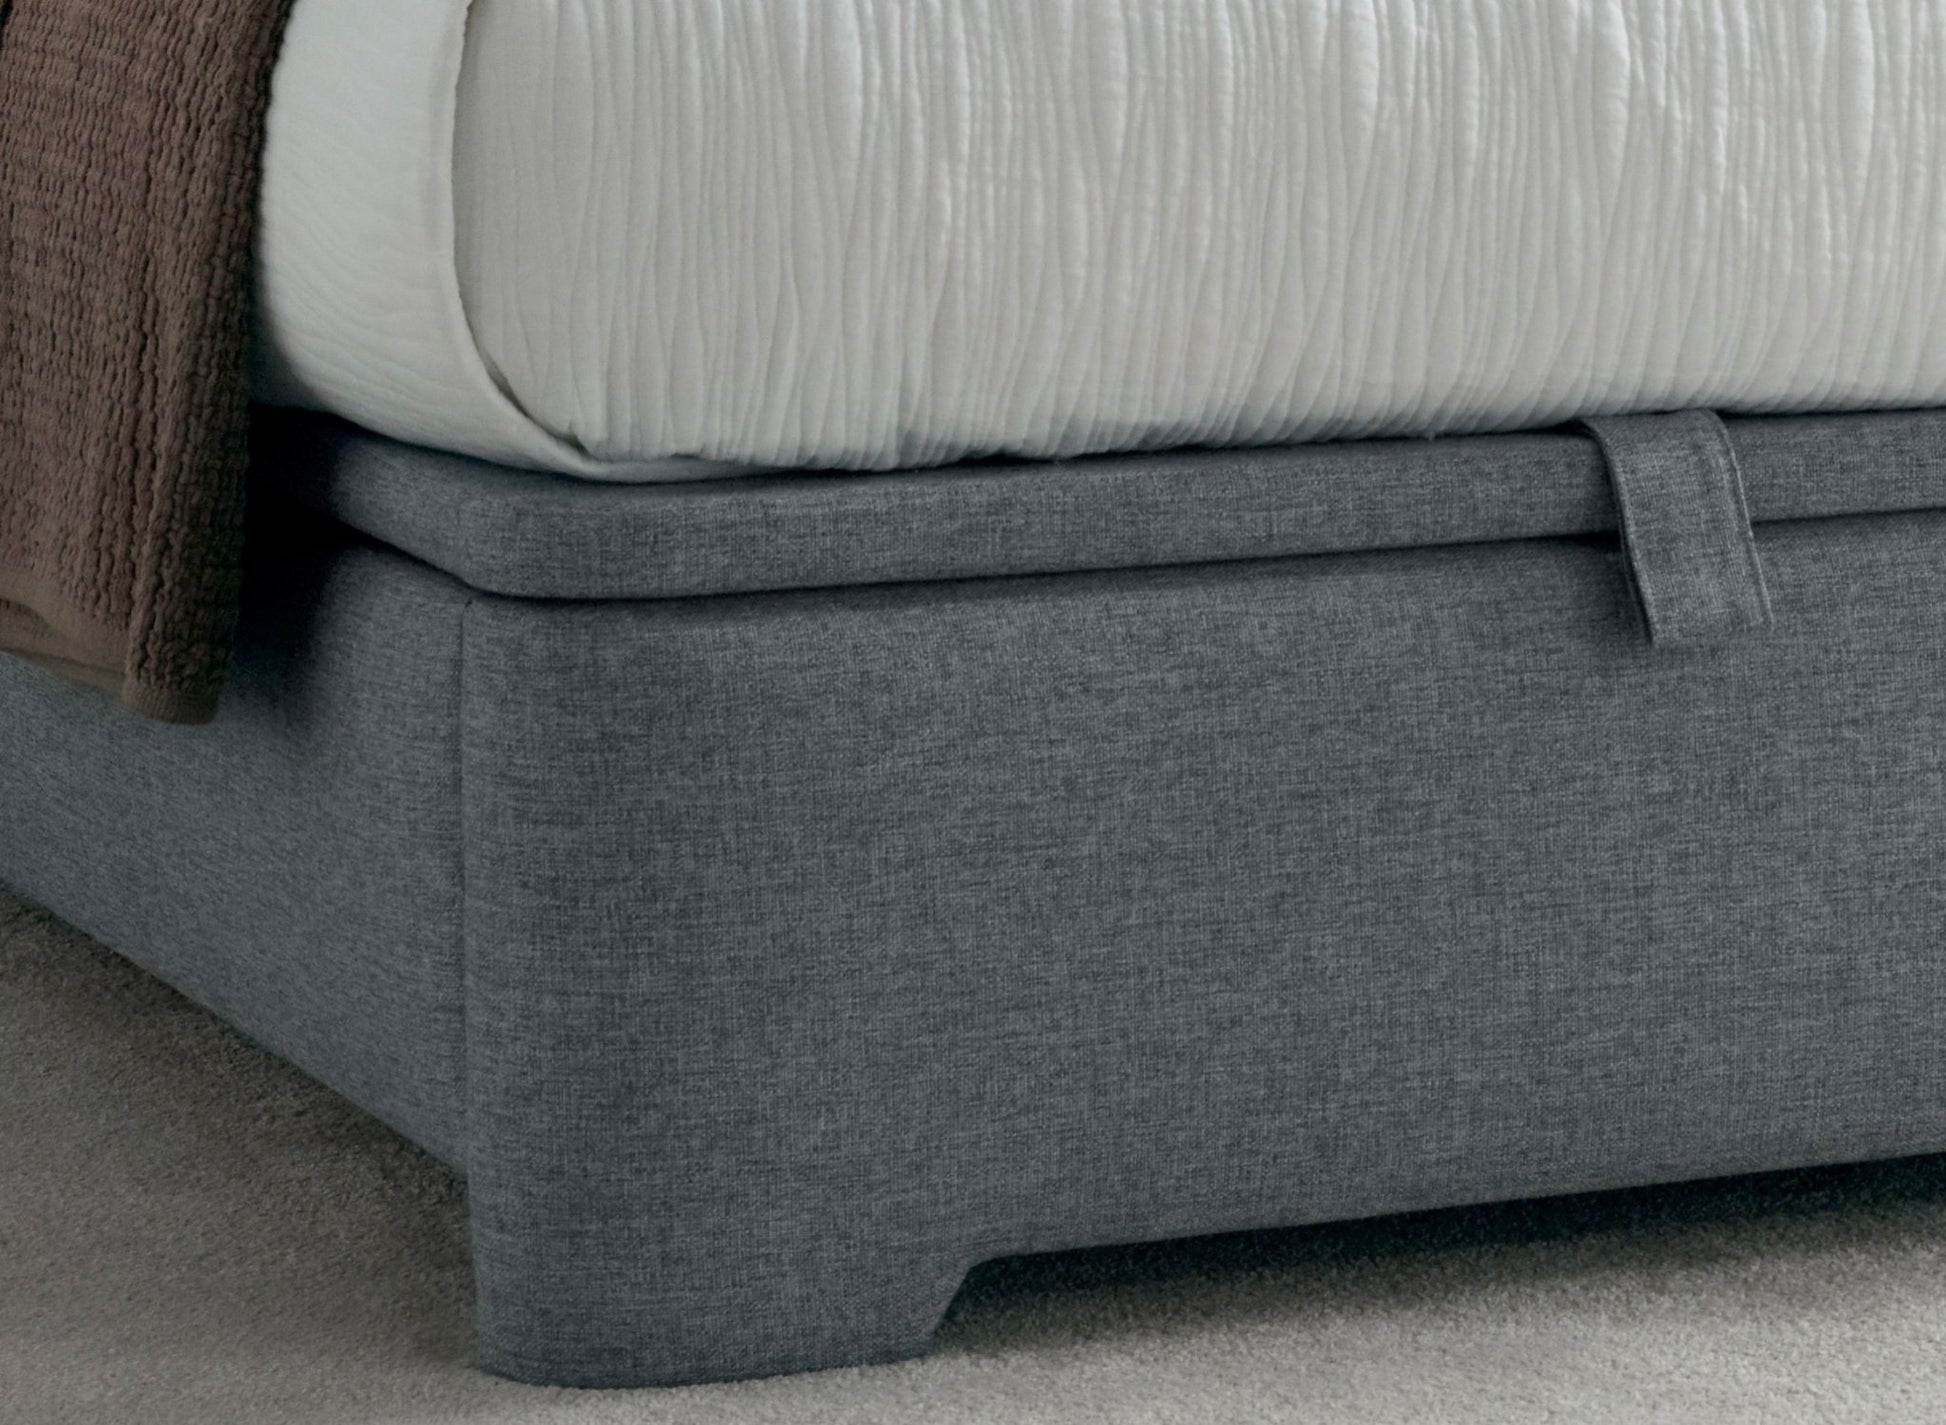 Appleby Ottoman Storage Bed Frame - Marbella Grey by Kaydian Design LTD in APPFL135MDG only at TV Beds Northwest